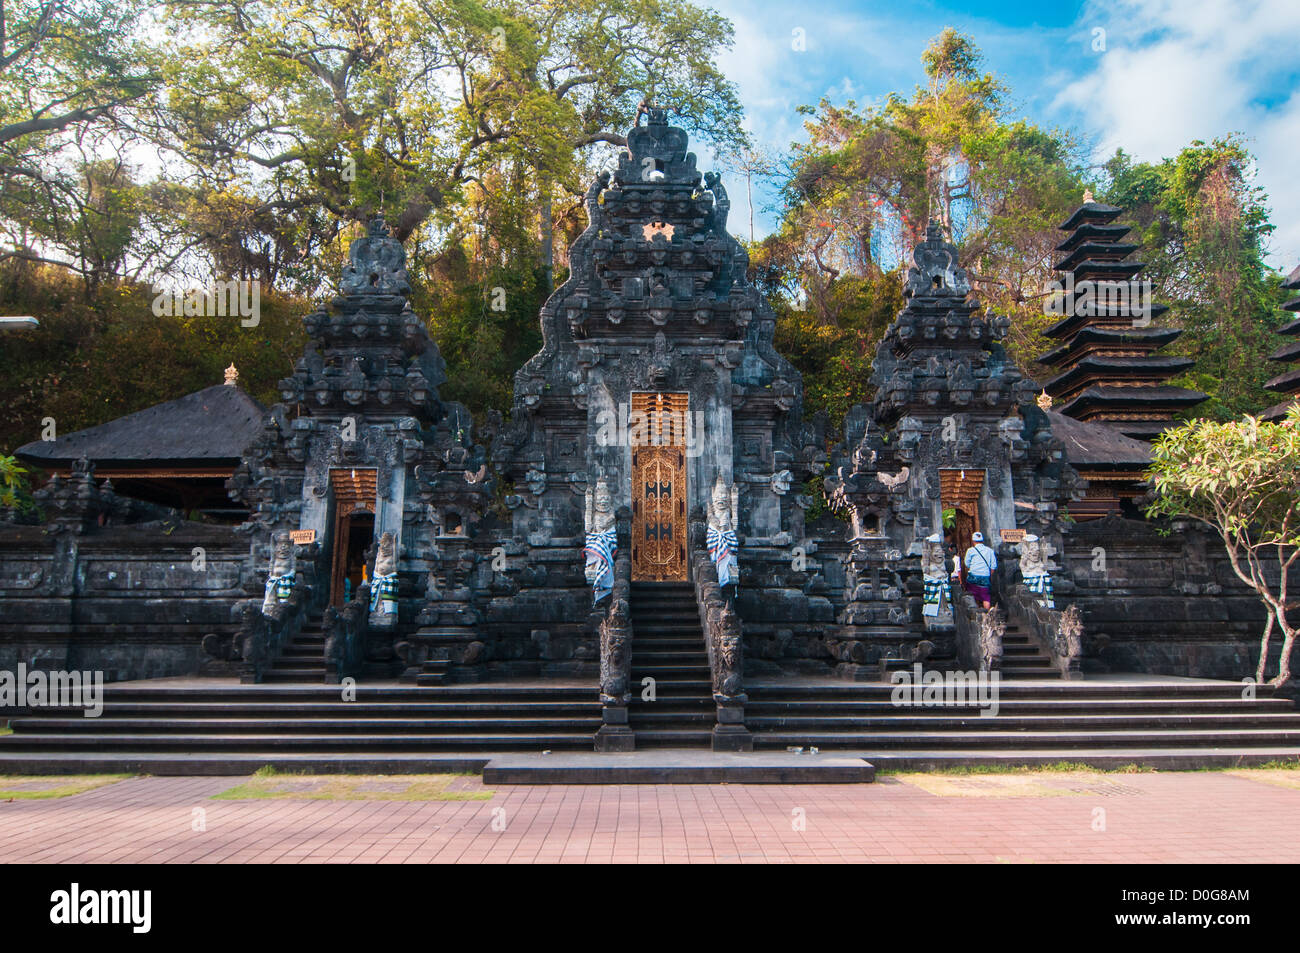 Sangriento Eslovenia Rodeado Traditional balinese temple - bat temple Goa Lawah, Bali, Indonesia Stock  Photo - Alamy